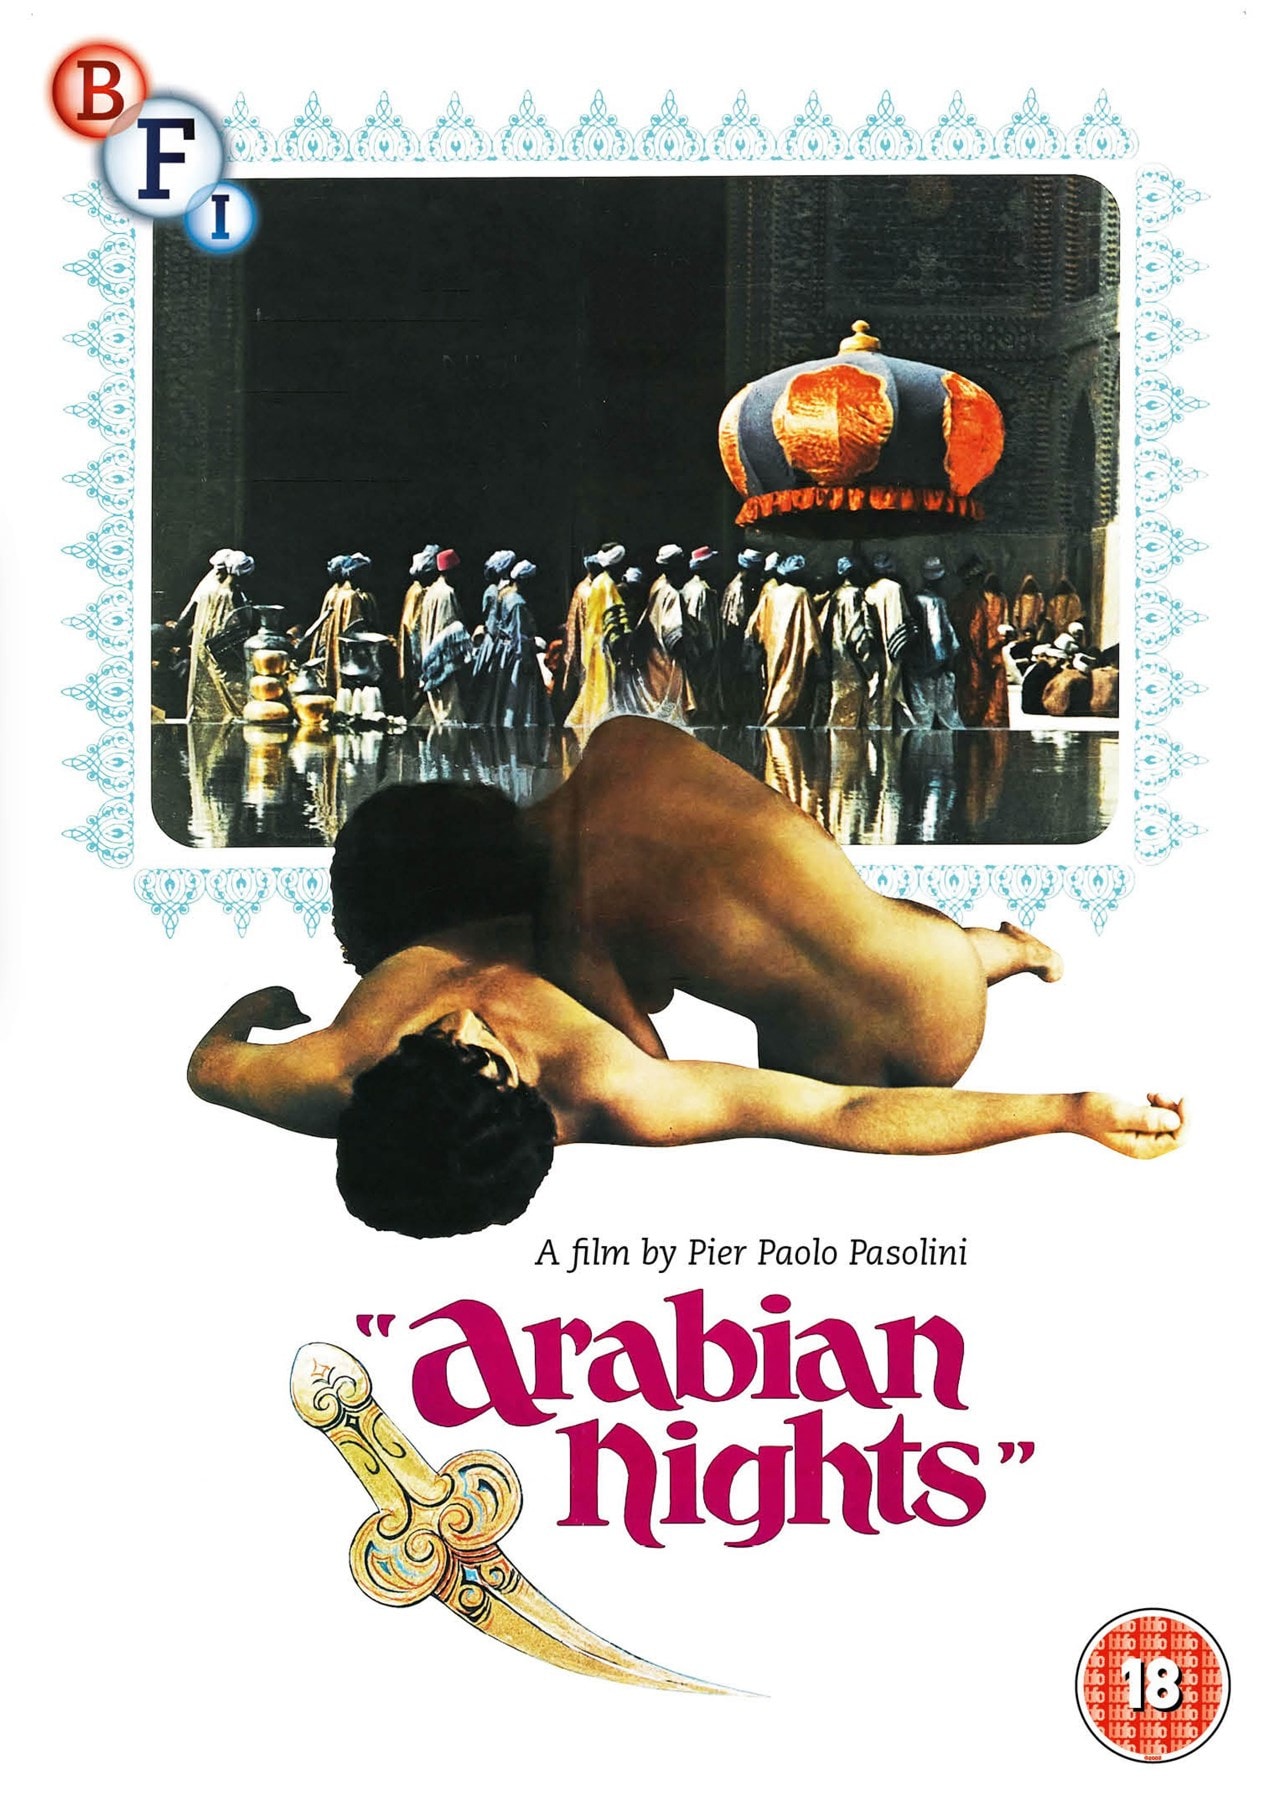 Arabian Nights | DVD | Free shipping over £20 | HMV Store